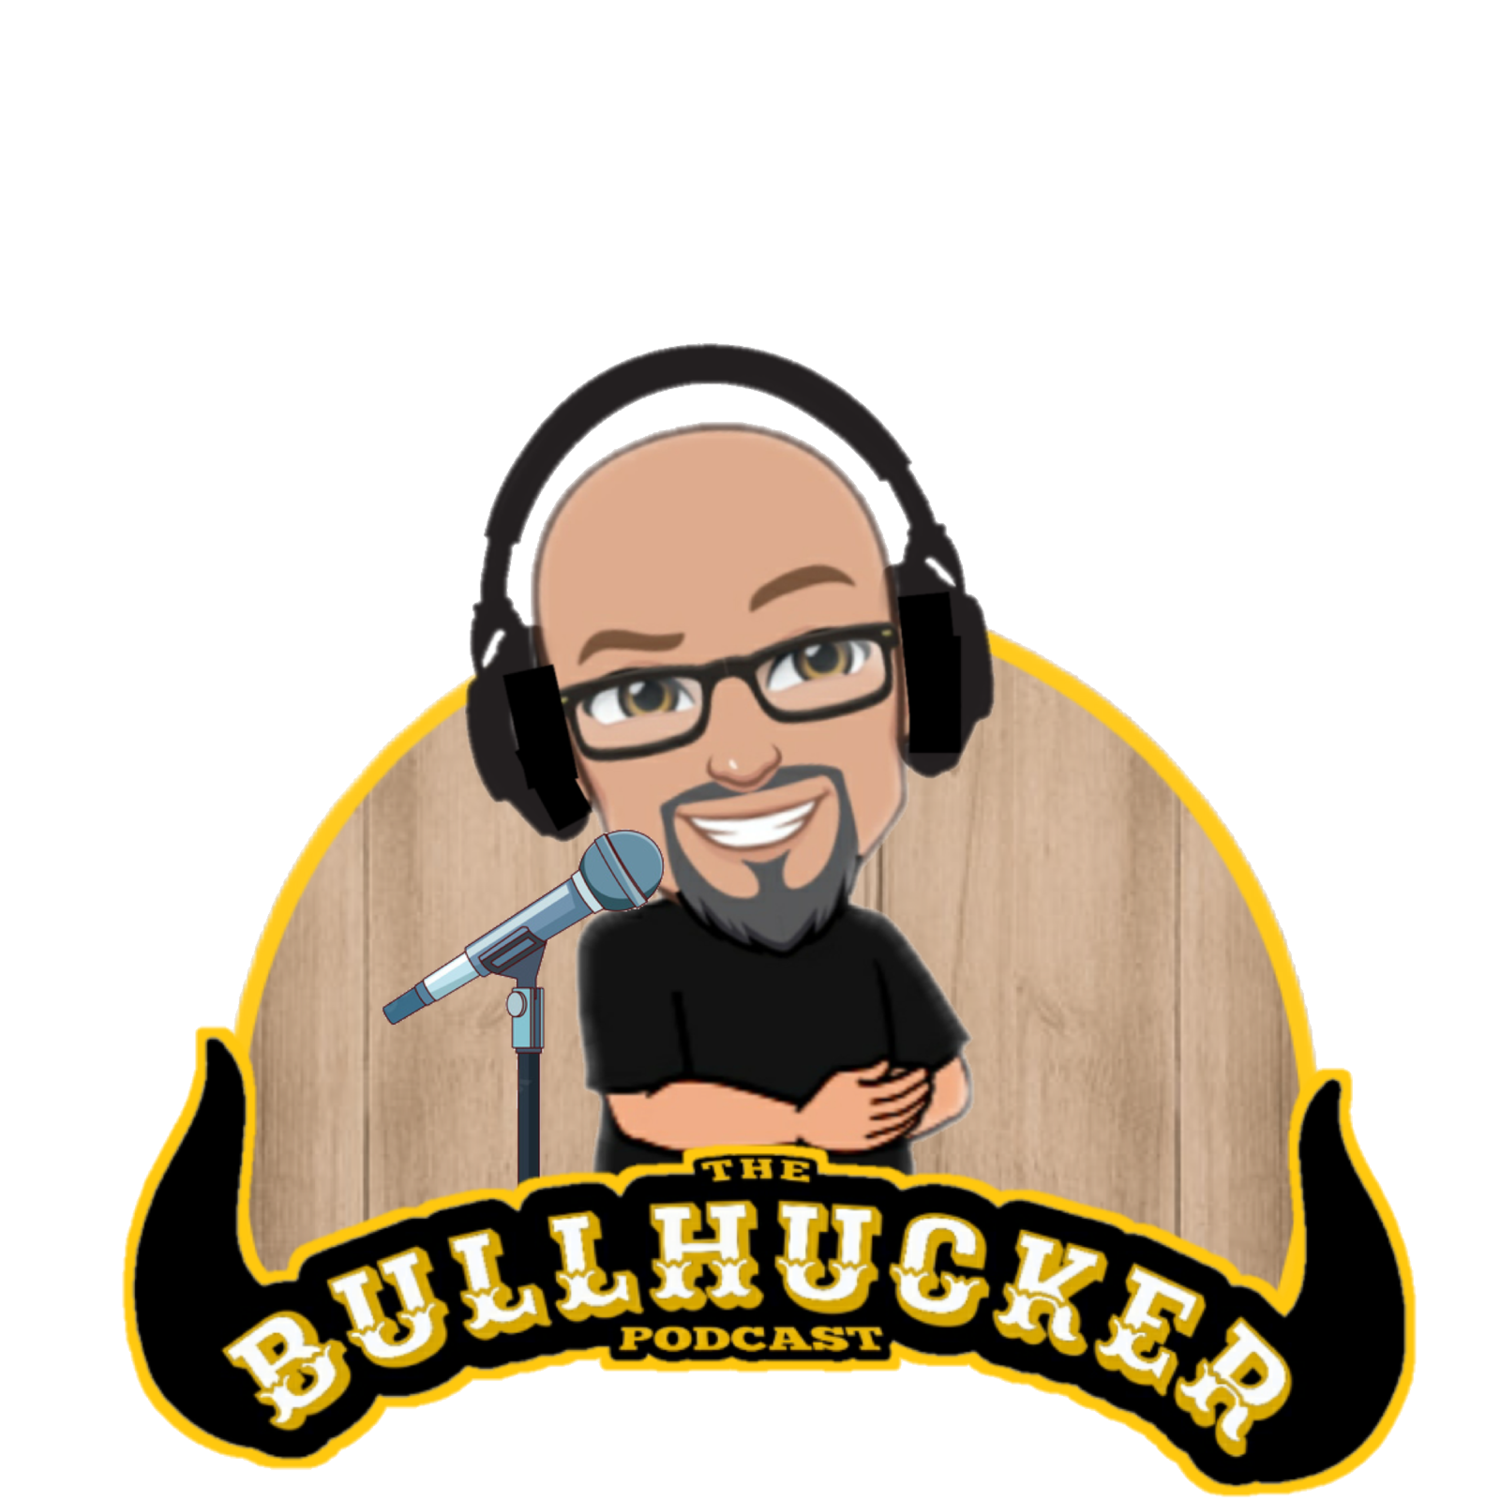 The Bullhucker Podcast